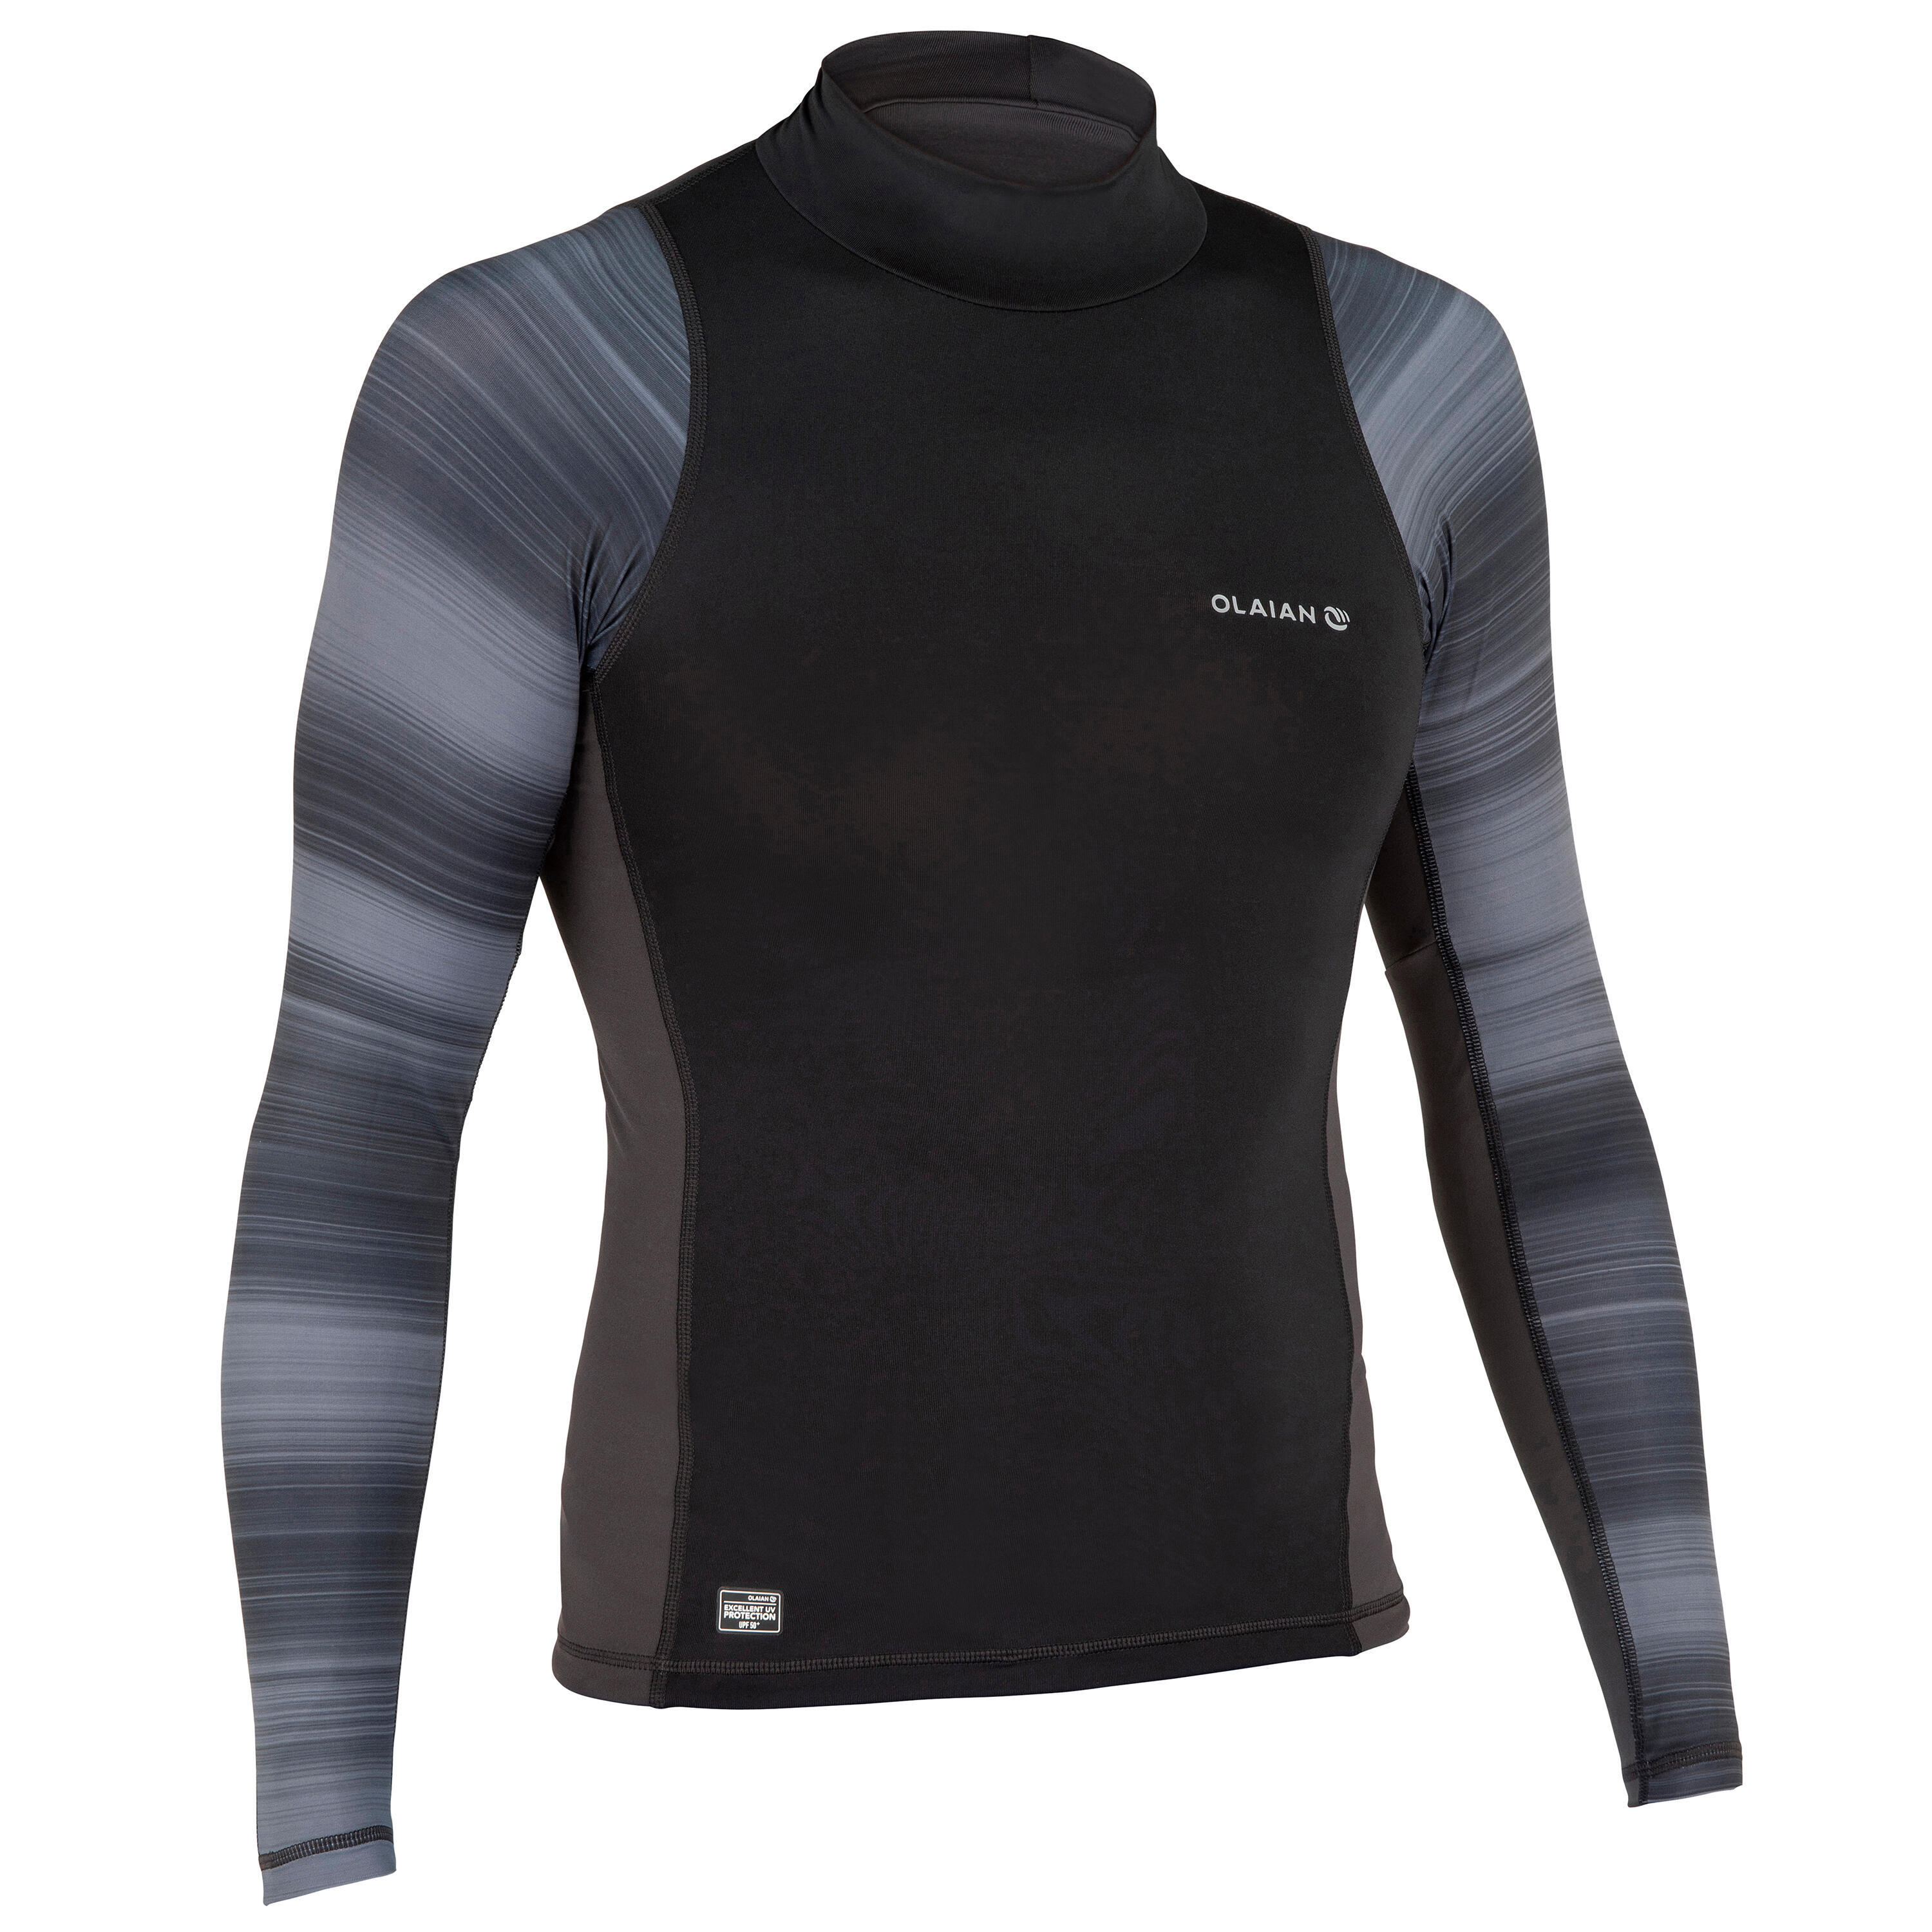 OLAIAN UV-Shirt langarm Herren UV-Schutz 50+ 500 schwarz/grau XL